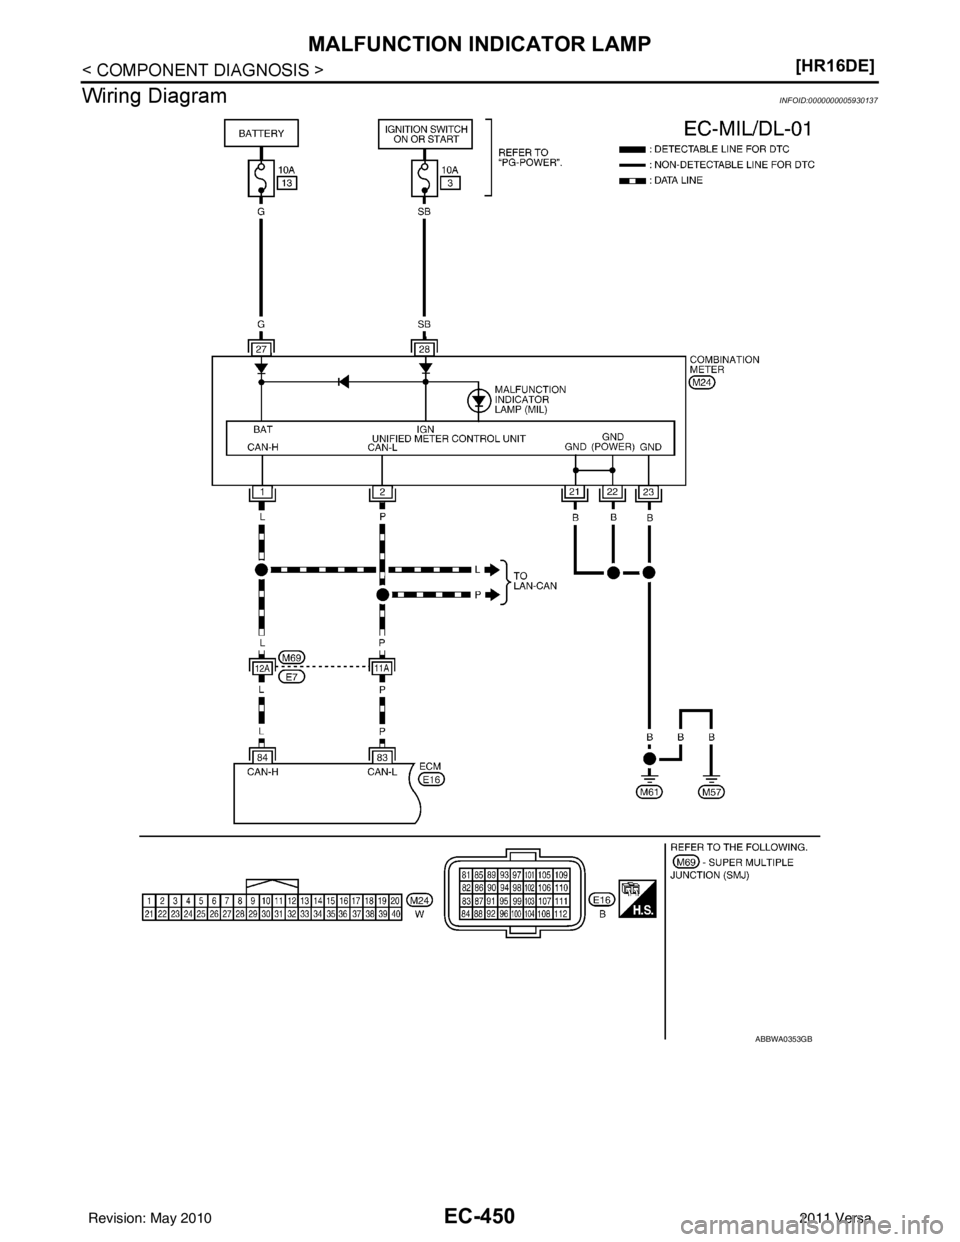 NISSAN LATIO 2011  Service Repair Manual EC-450
< COMPONENT DIAGNOSIS >[HR16DE]
MALFUNCTION INDICATOR LAMP
Wiring Diagram
INFOID:0000000005930137
ABBWA0353GB
Revision: May 2010 2011 Versa 